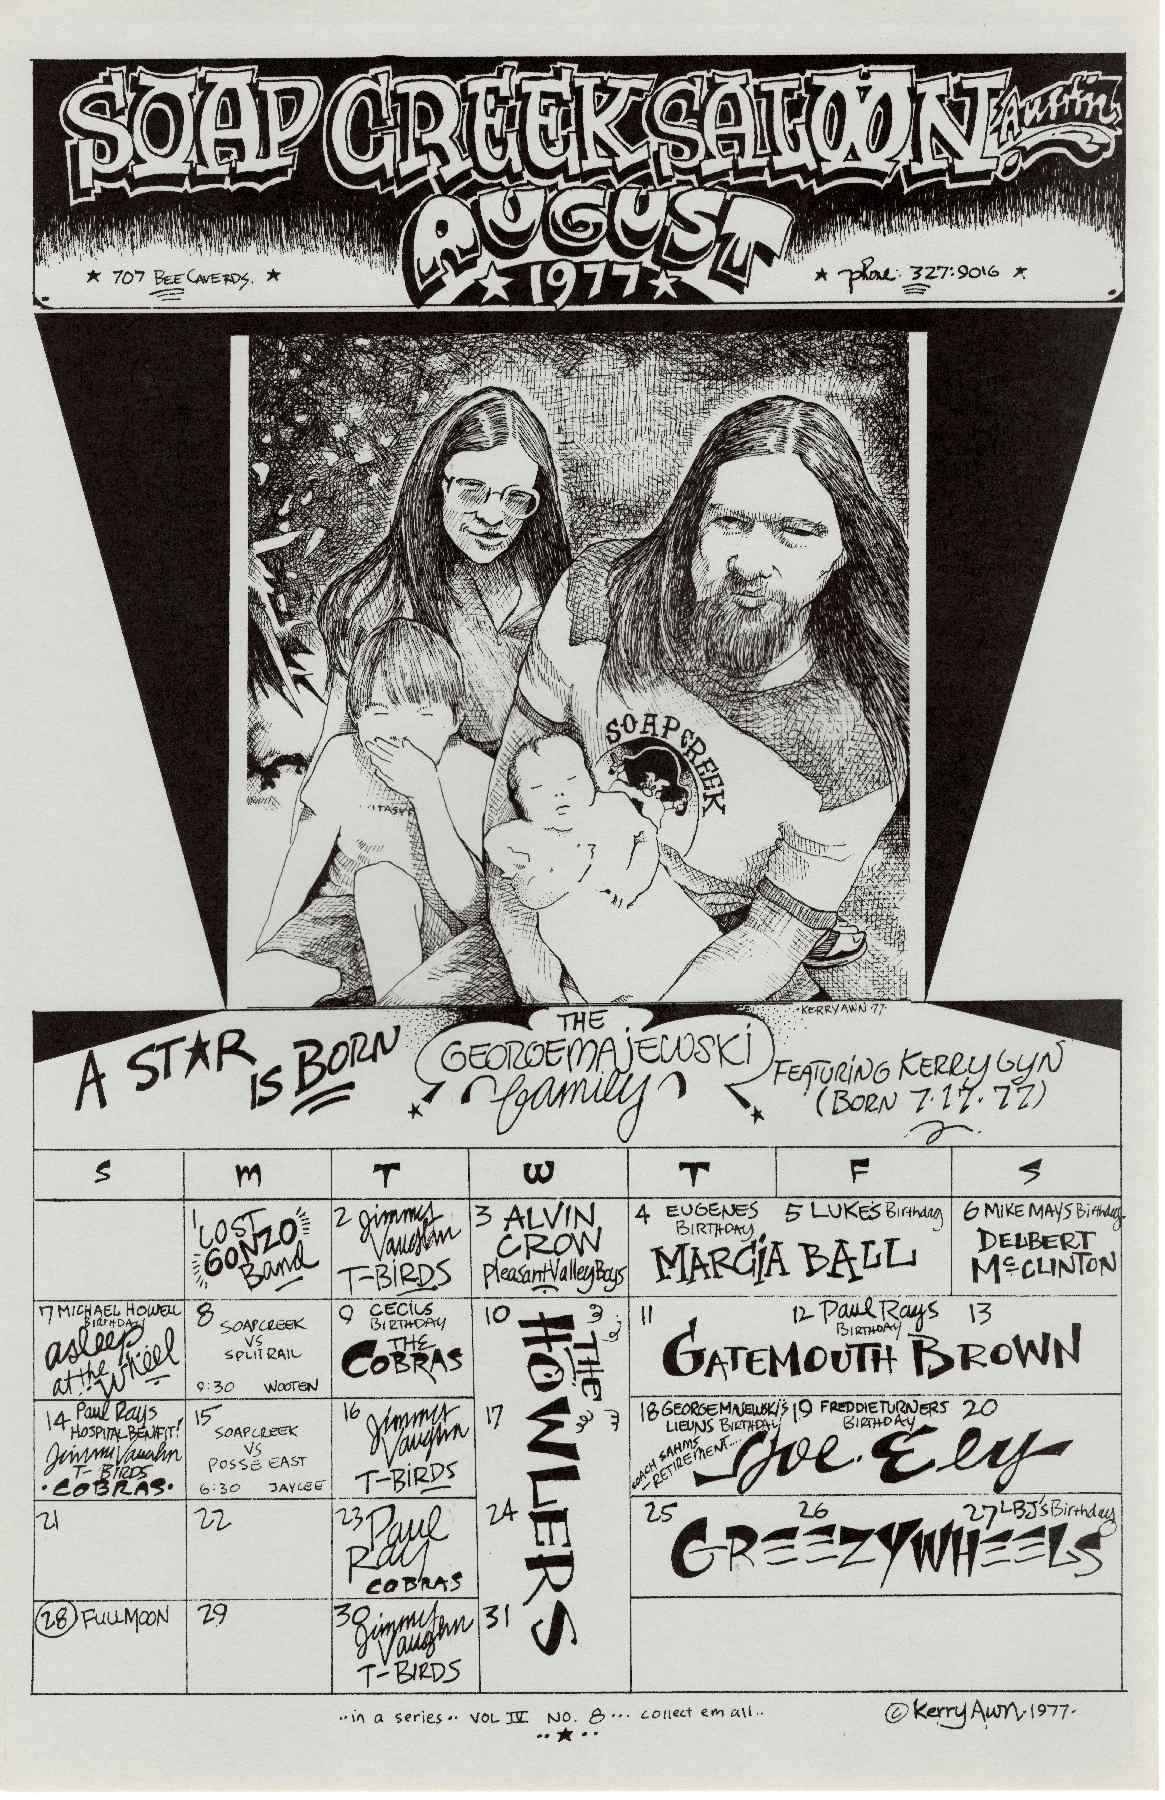 1977.08.August Calendar.Soap Creek Saloon.Awn.JPG